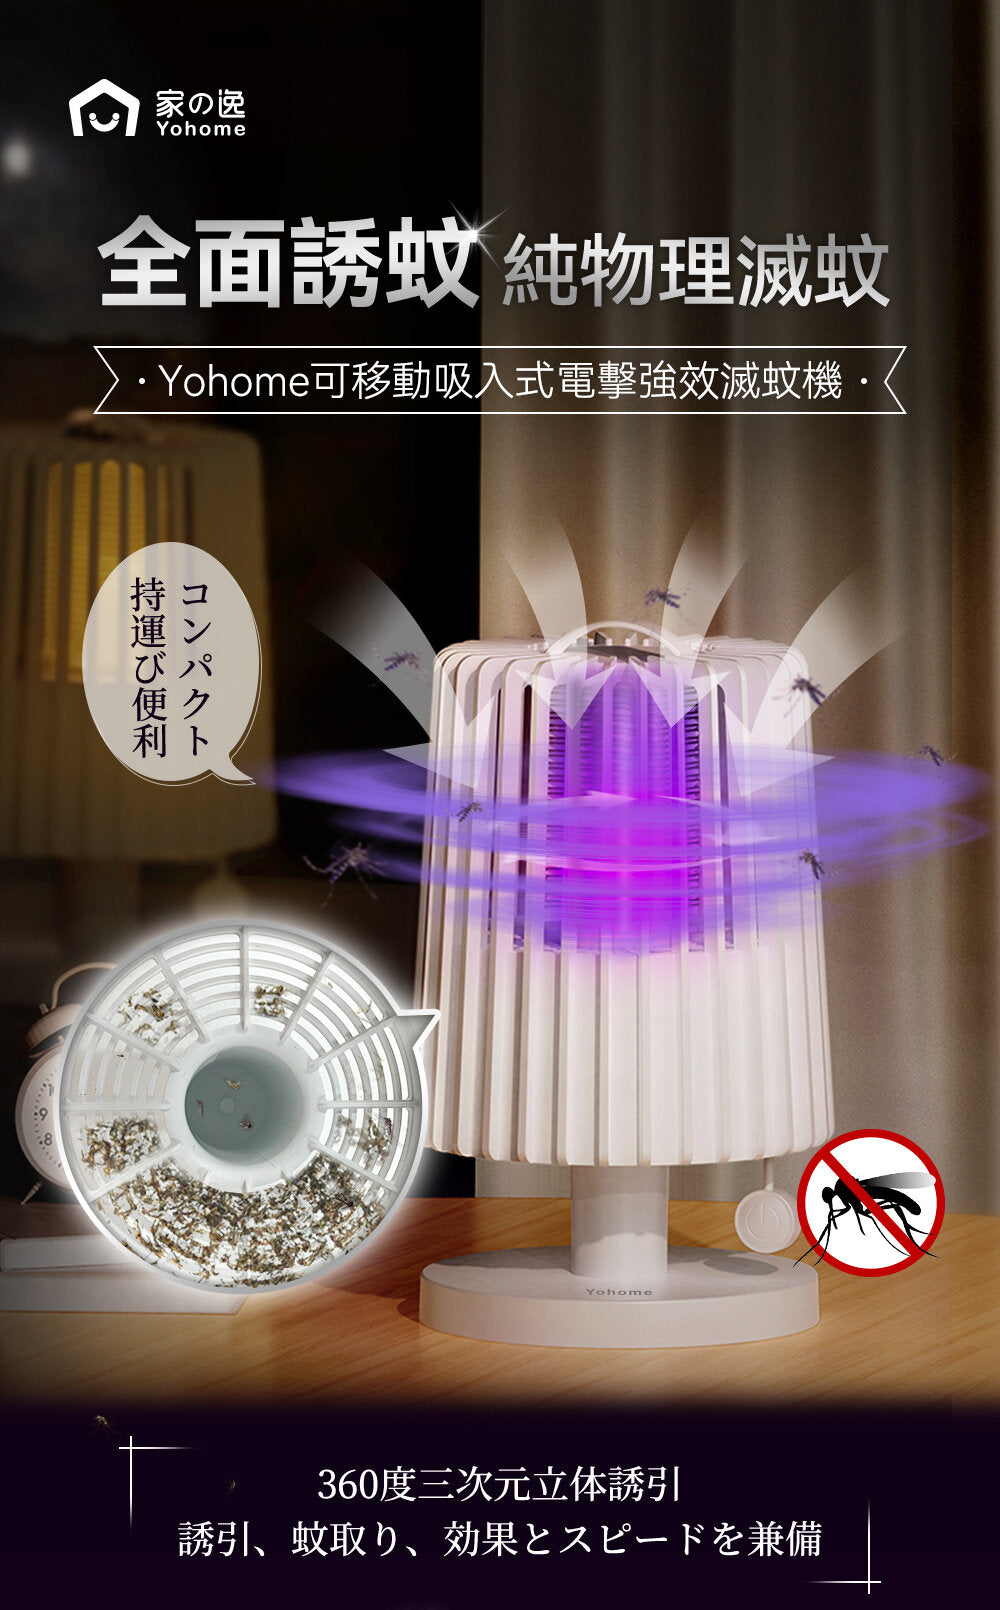 Home - Japan Yohome removable inhalation electric shock powerful mosquito killer machine | Mosquito trap | Mosquito killer | Desk lamp | Night light LJC-155